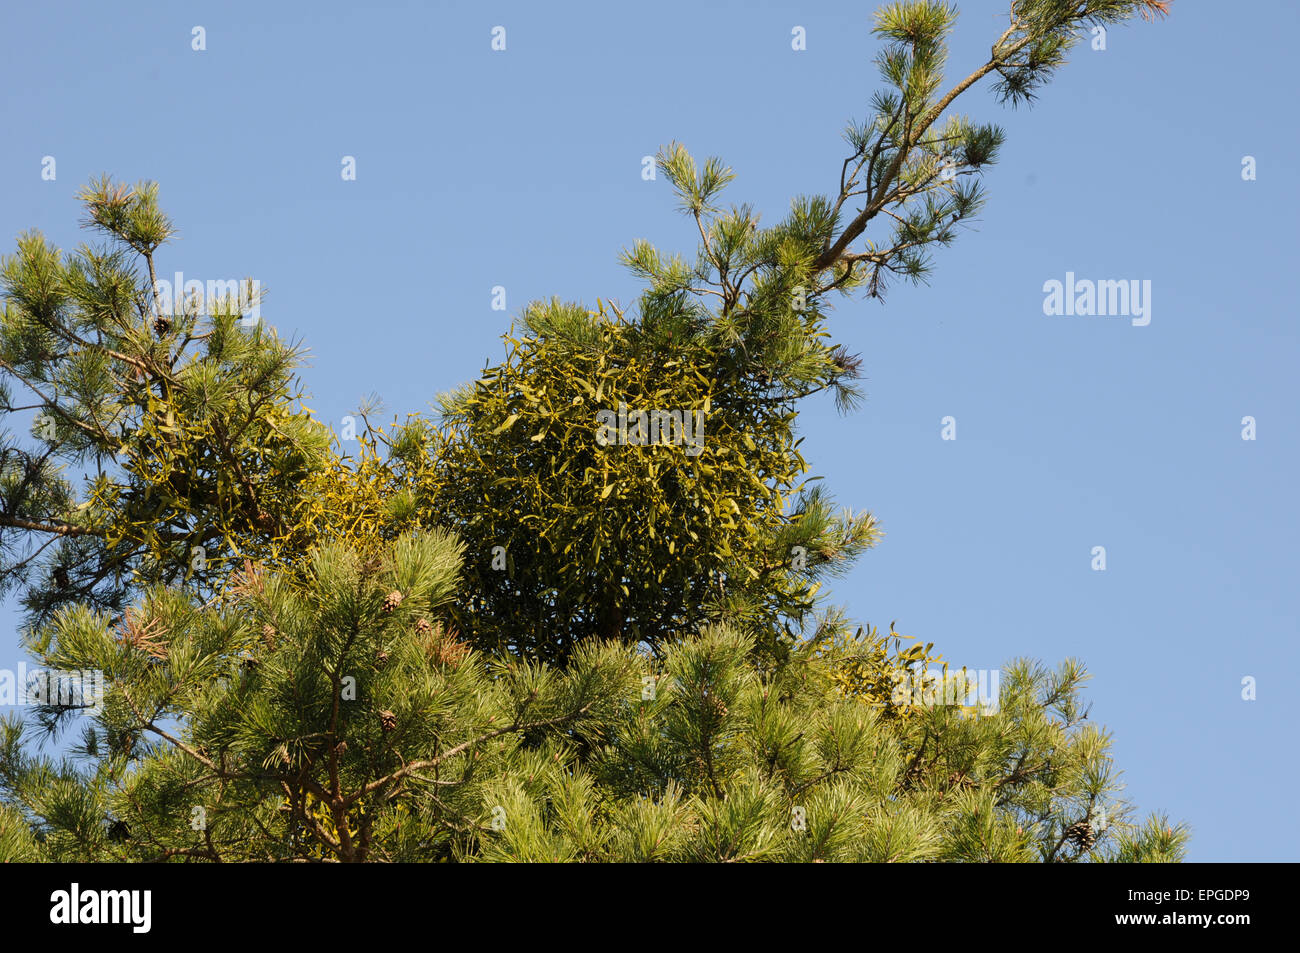 Scots pine with mistletoes Stock Photo